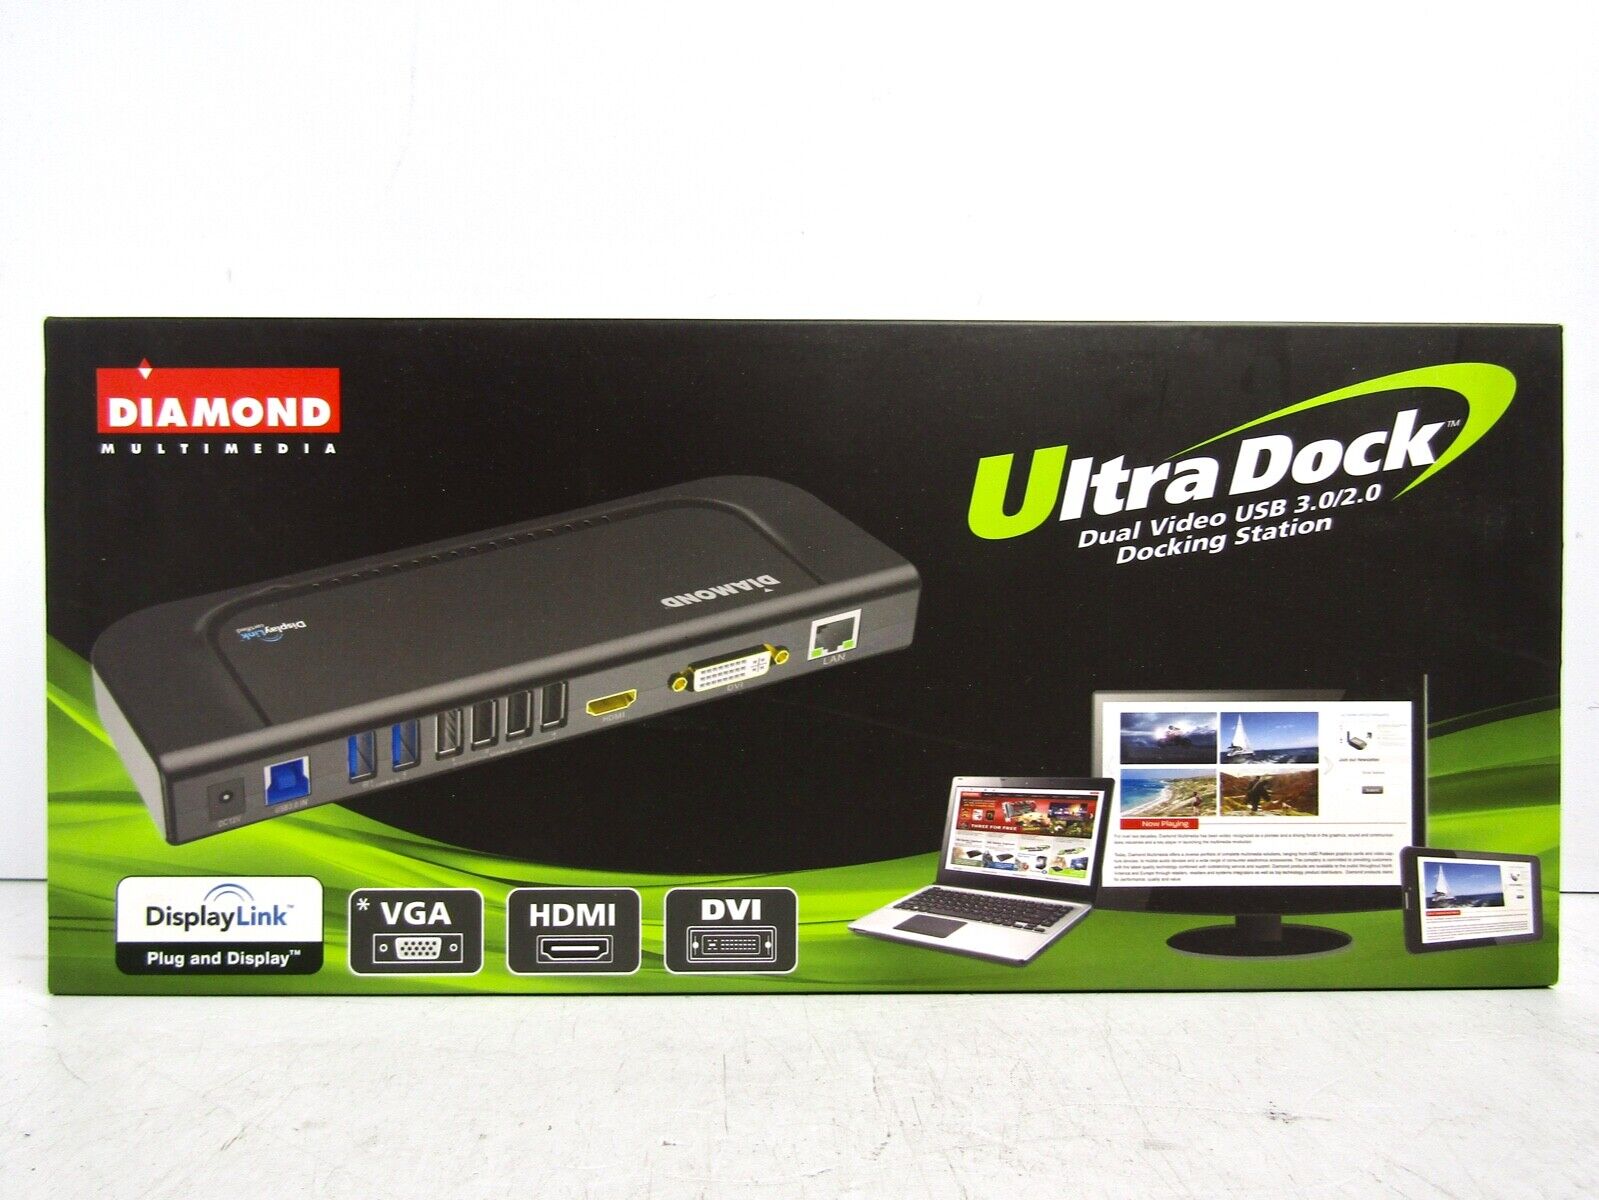 Diamond Multimedia Ultra Dock Dual Video USB 3.0/2.0 Docking Station DS3900V2